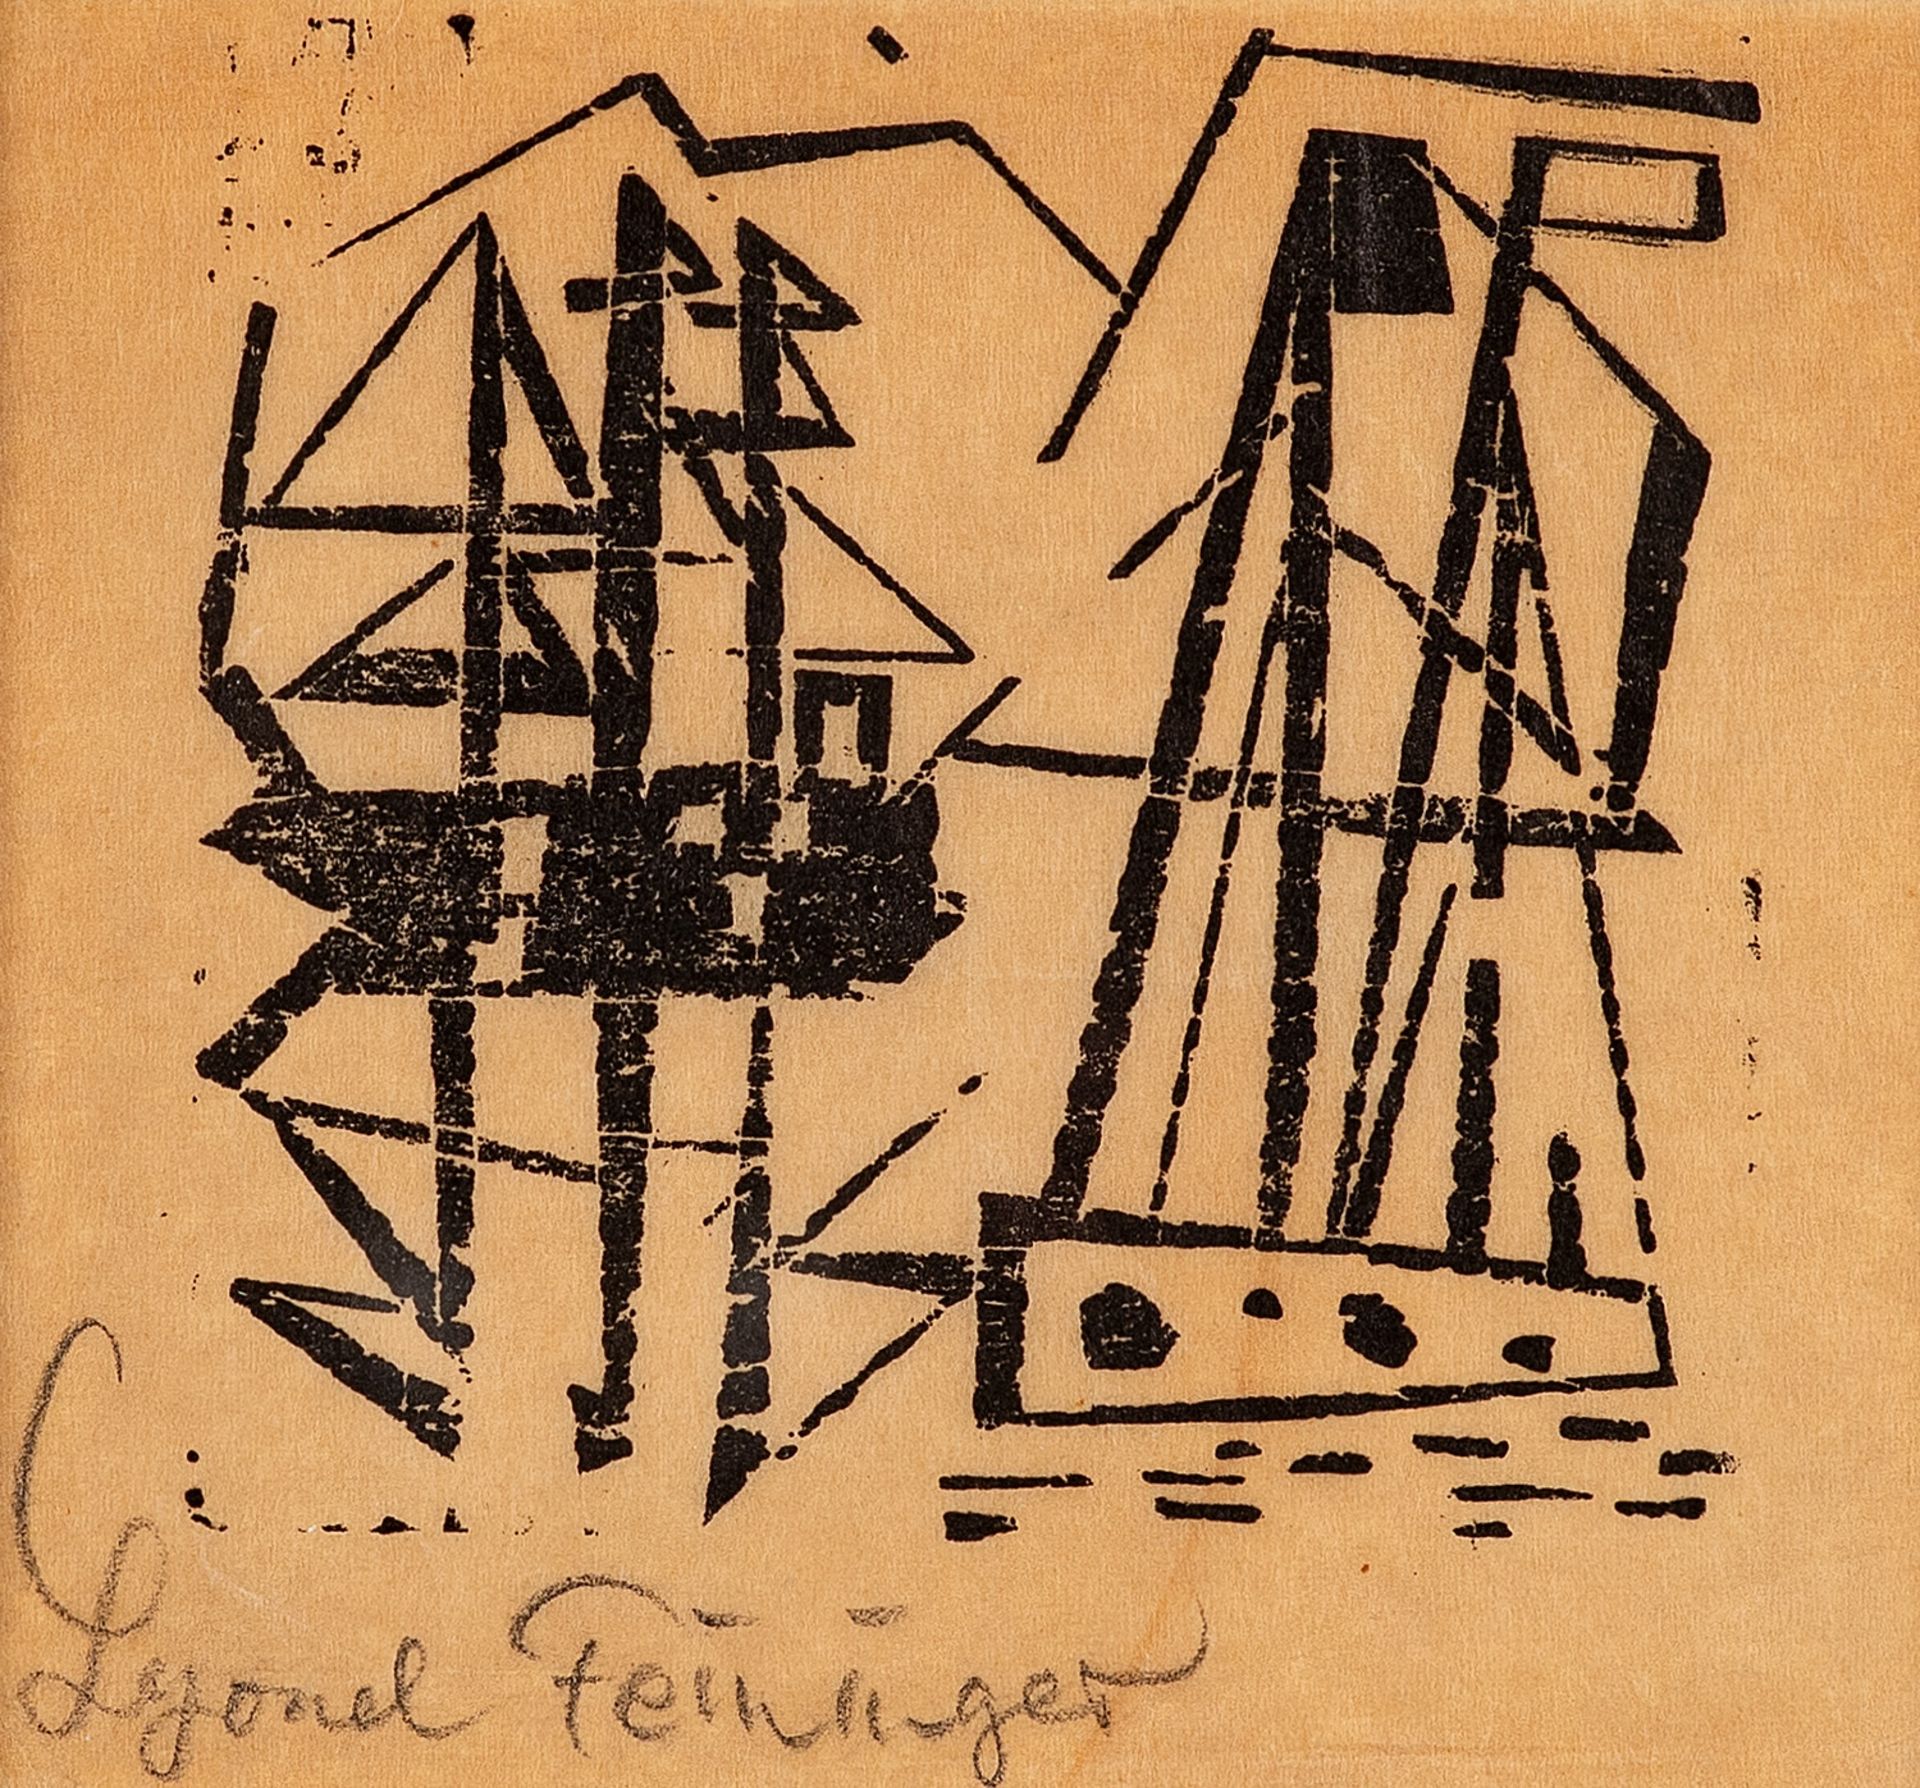 Lyonel Feininger – Schiffe mit Spiegelungen (Boats with Reflections).